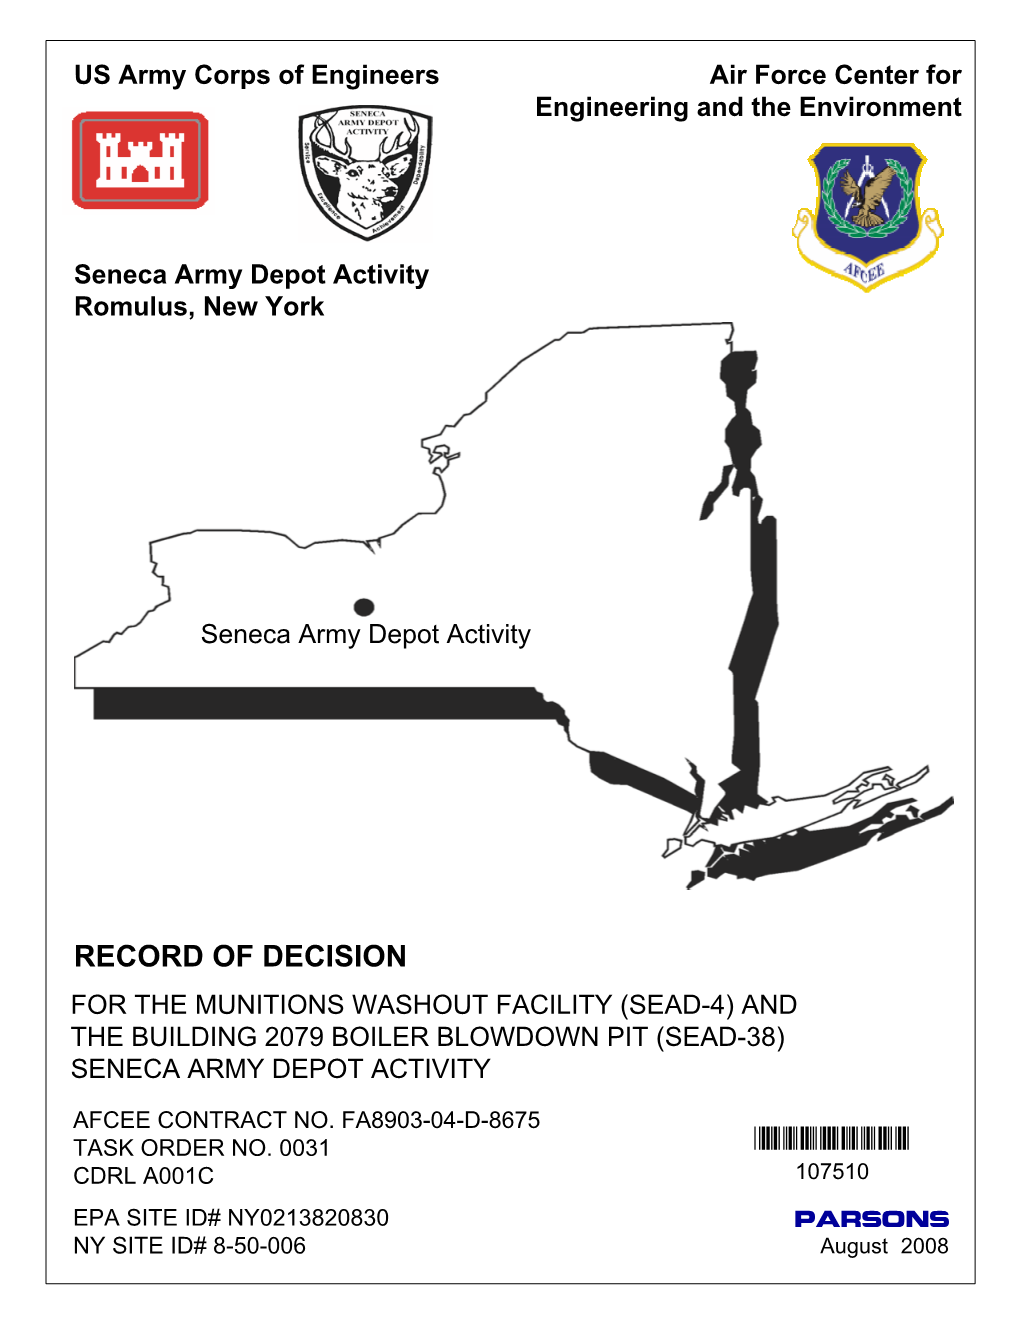 Seneca Army Depot Activity Romulus, New York